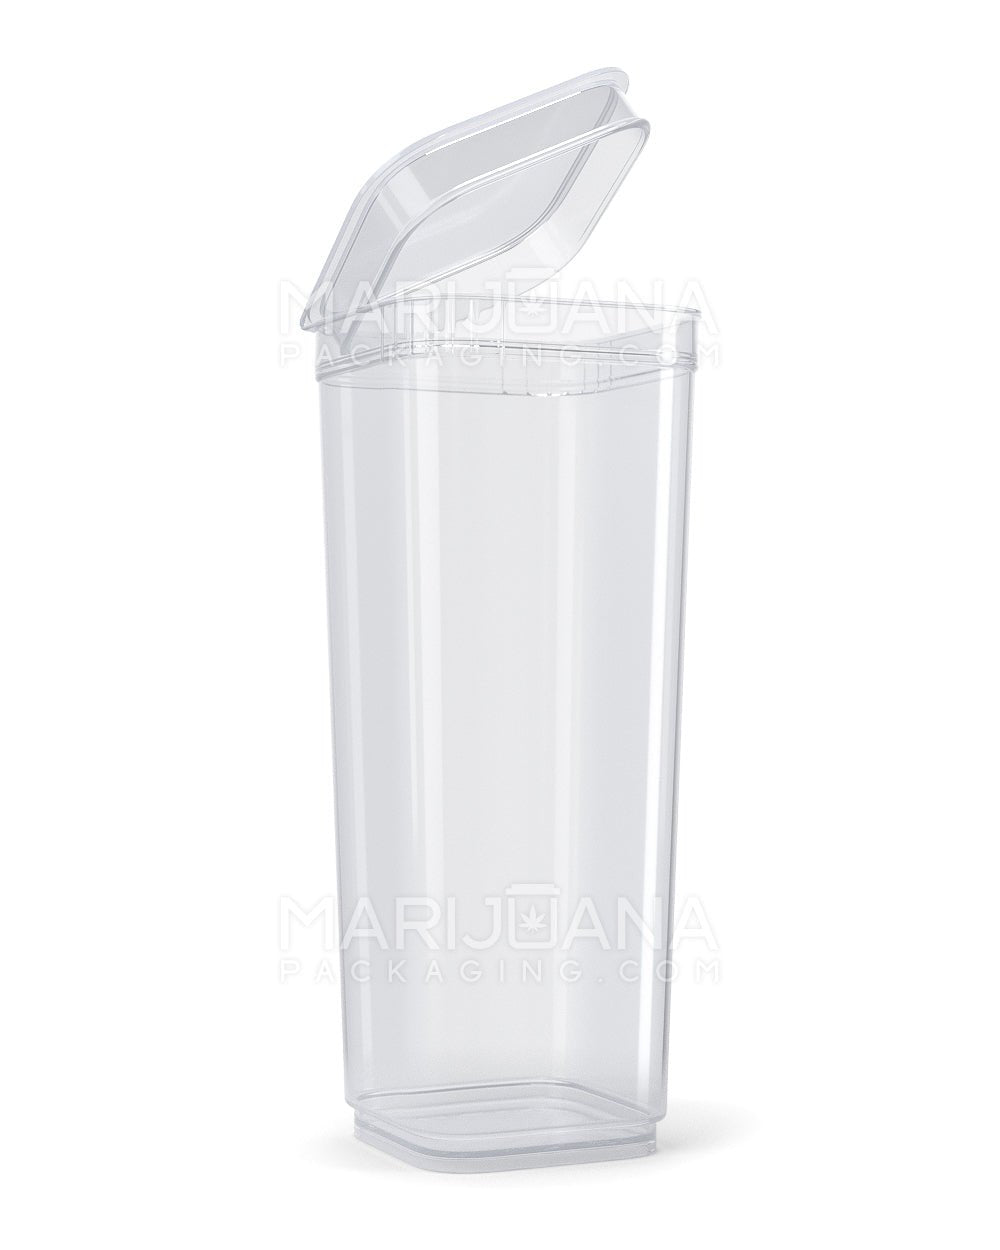 POLLEN GEAR | Child Resistant 100% Recyclable Transparent Clear Pop Box Pop Top Bottles | 60dr - 14g - 205 Count - 4